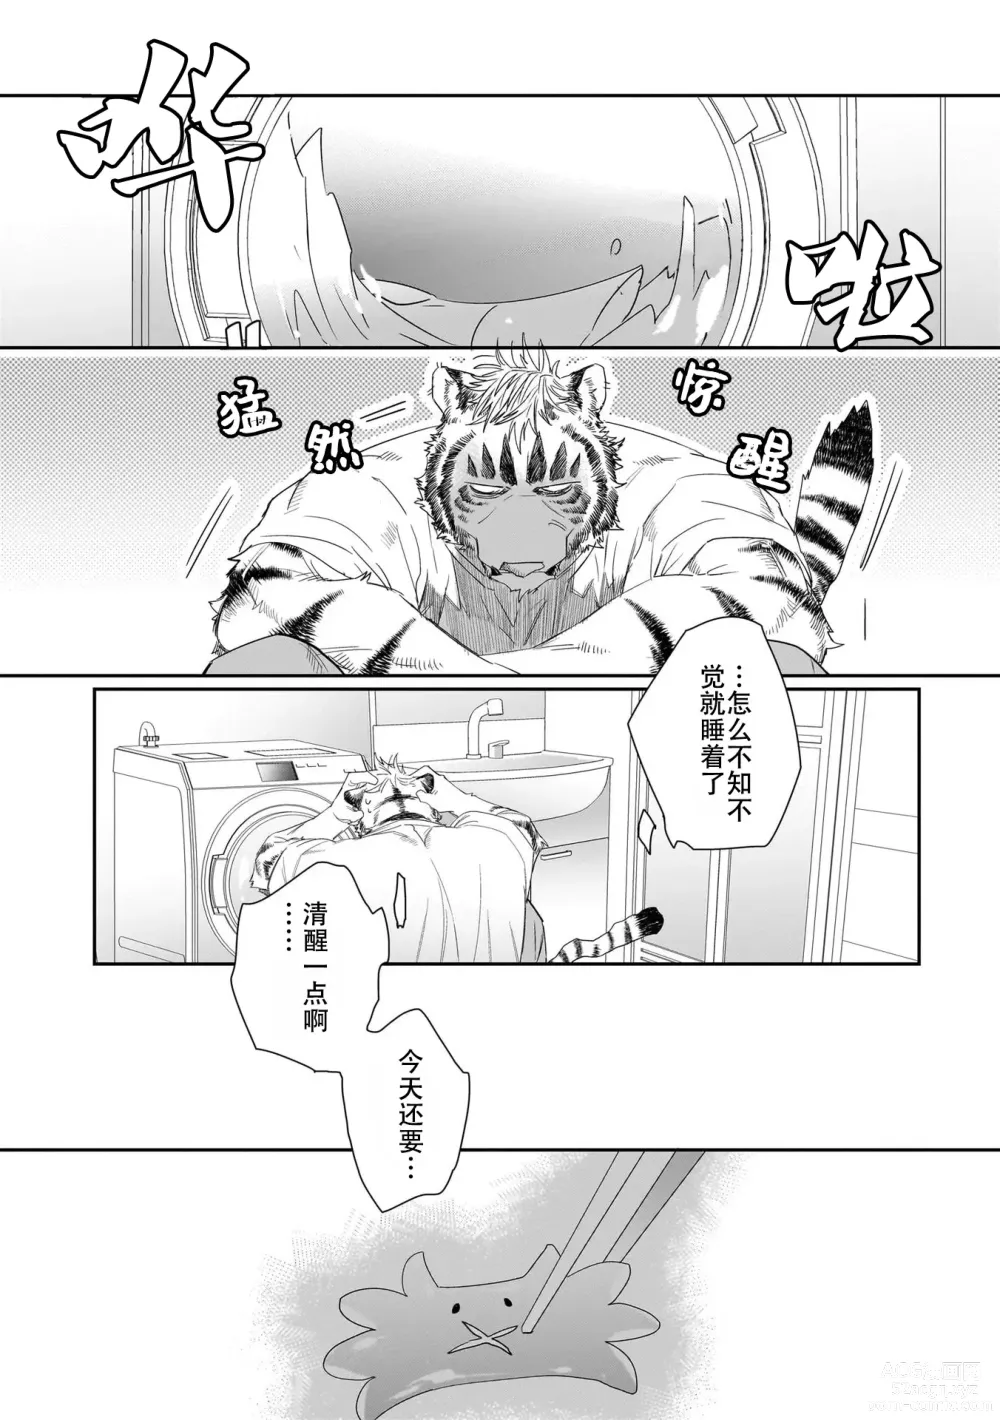 Page 5 of manga 欢迎来到寅野侦探事务所 第四-六话